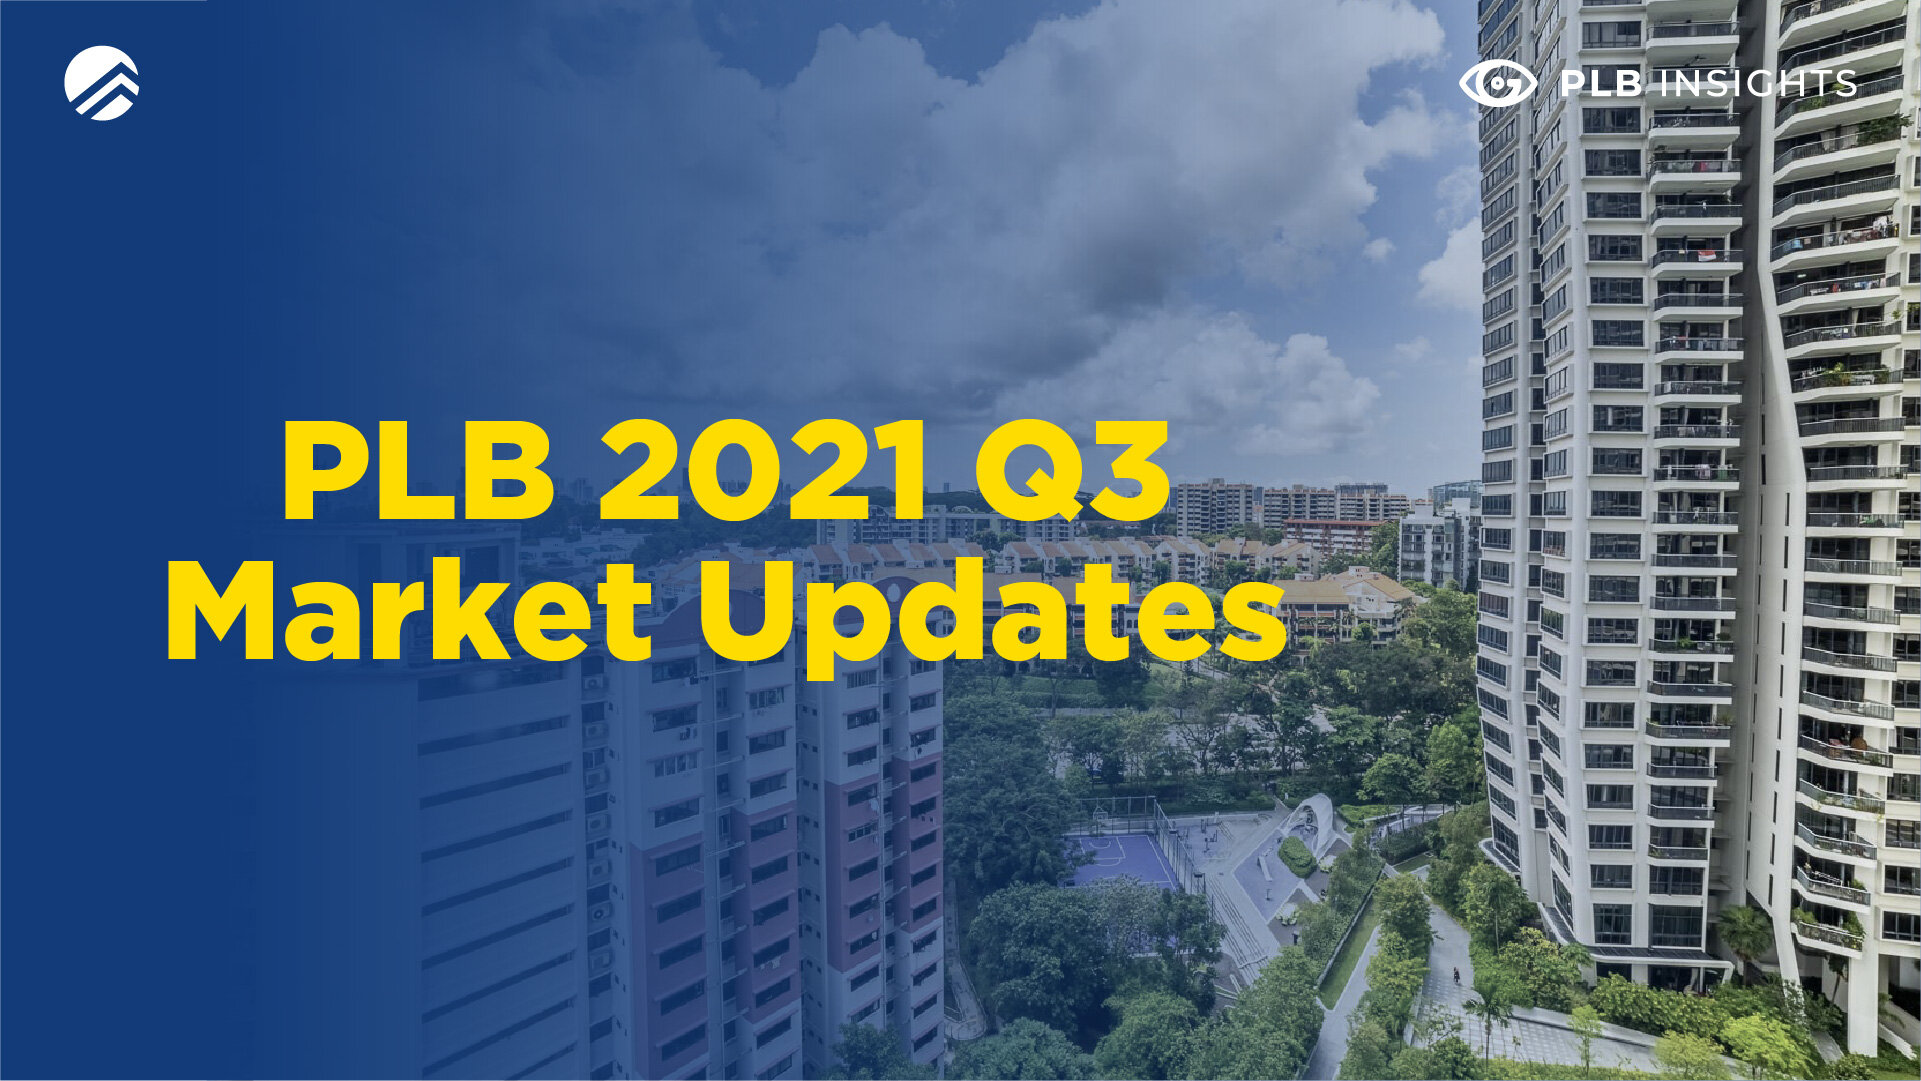 PLB 2021 Q3 Market Updates_Article Cover.jpg